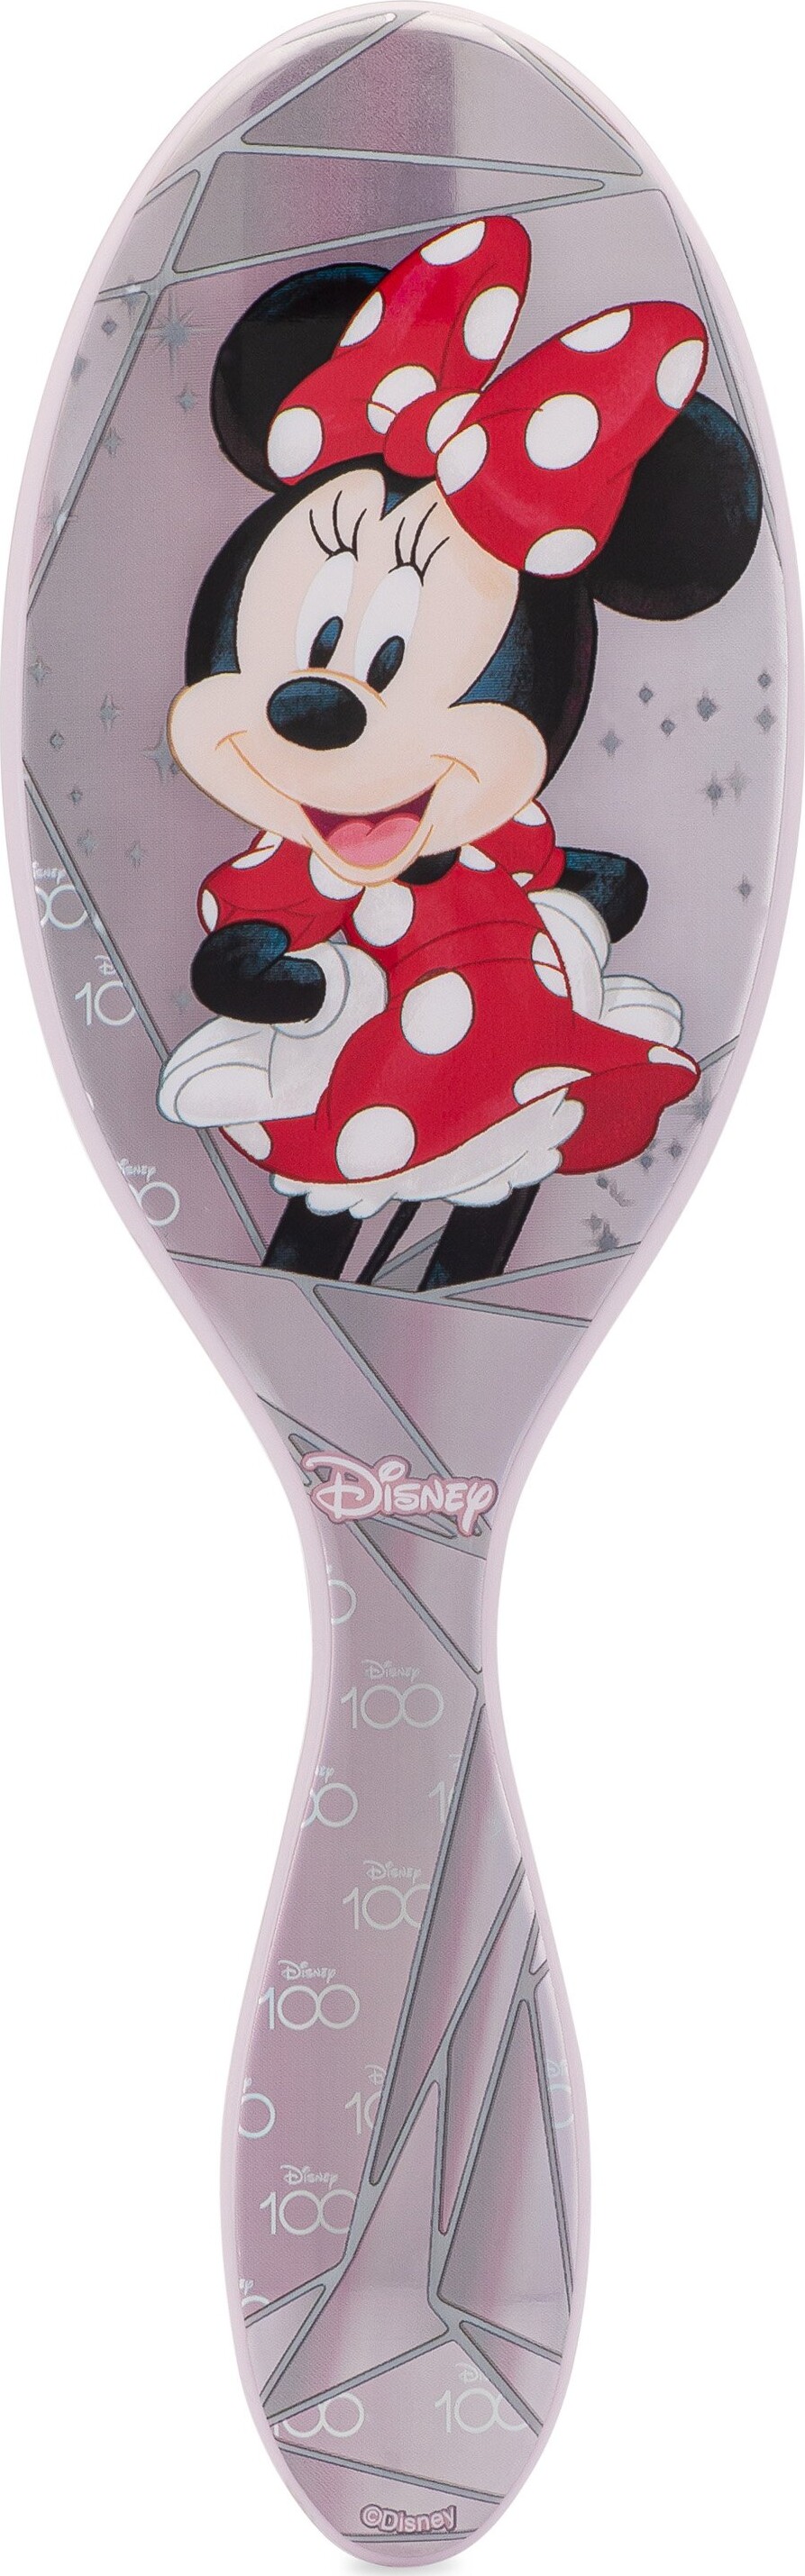 Se Wet Brush - Original Disney 100 Detangler Minnie Mouse hos Gucca.dk